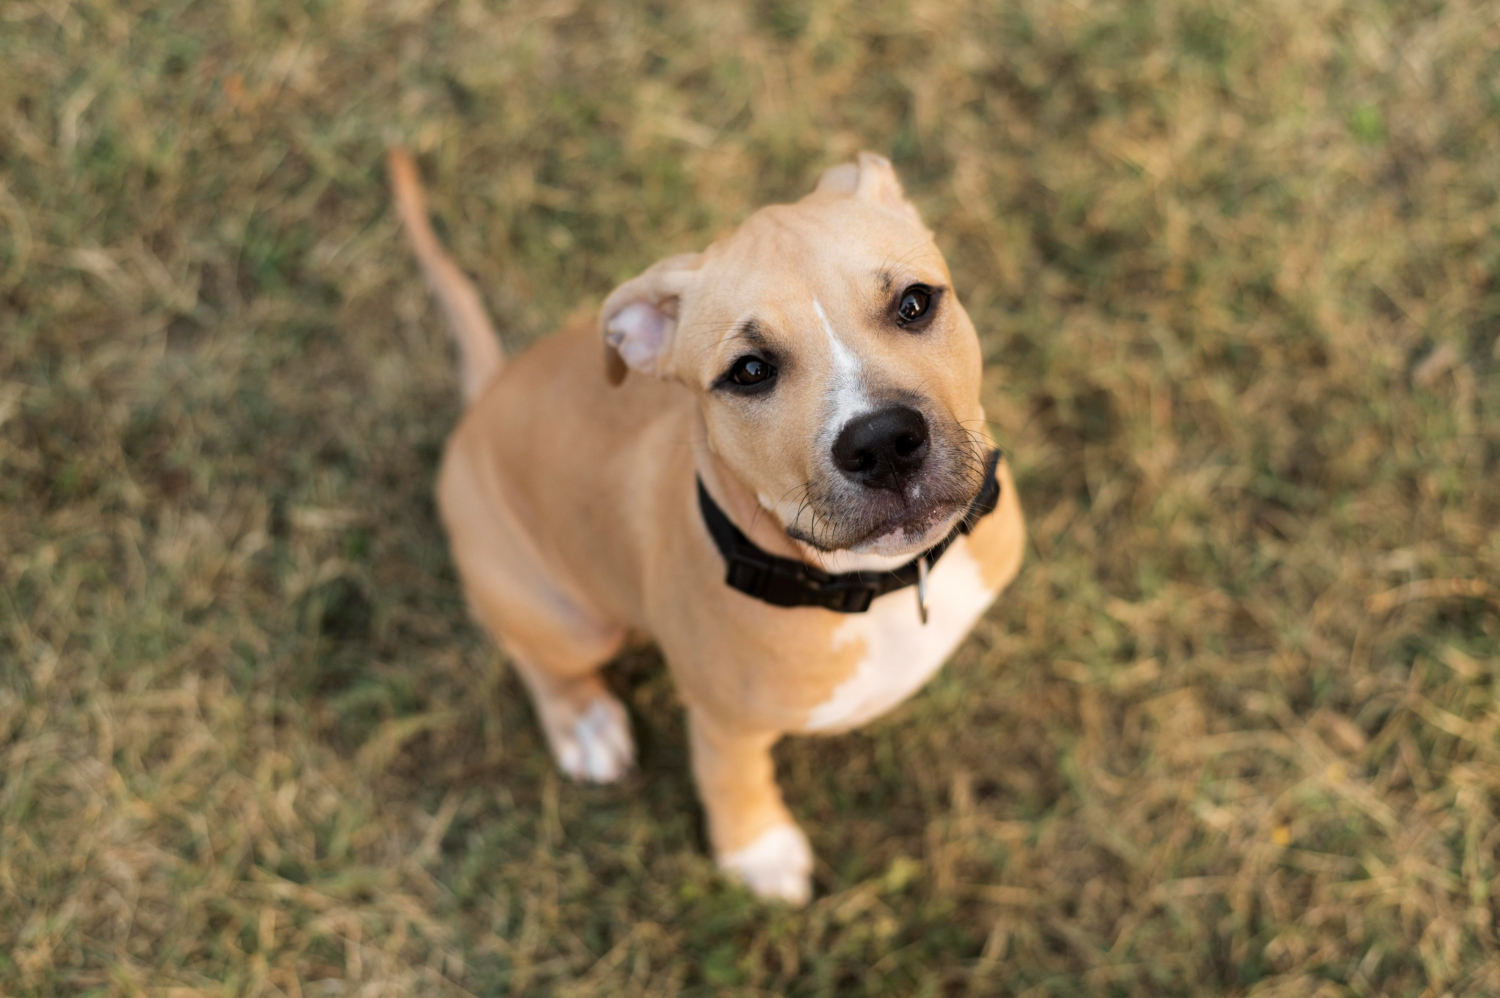 How to train a pitbull dog?